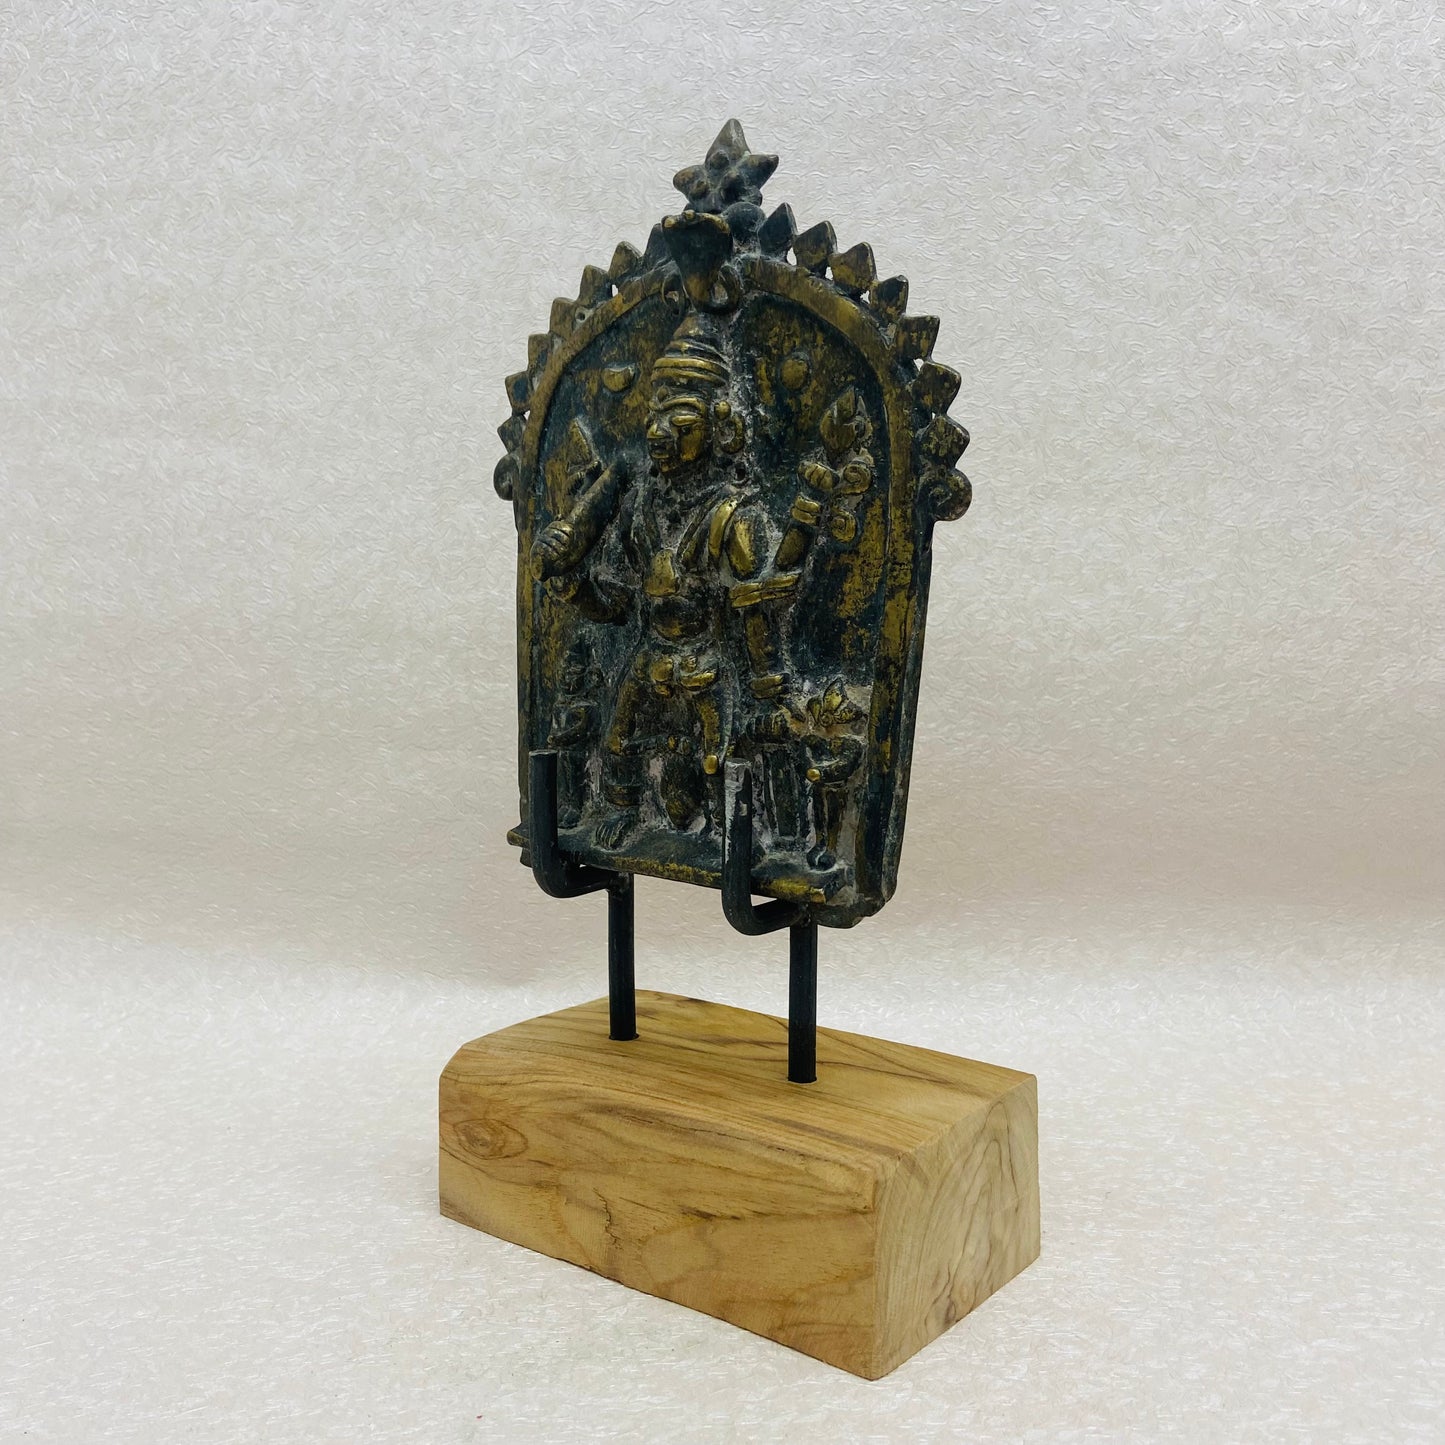 Antique Brass Veerabhadra plaque or Virabhadra Plaque